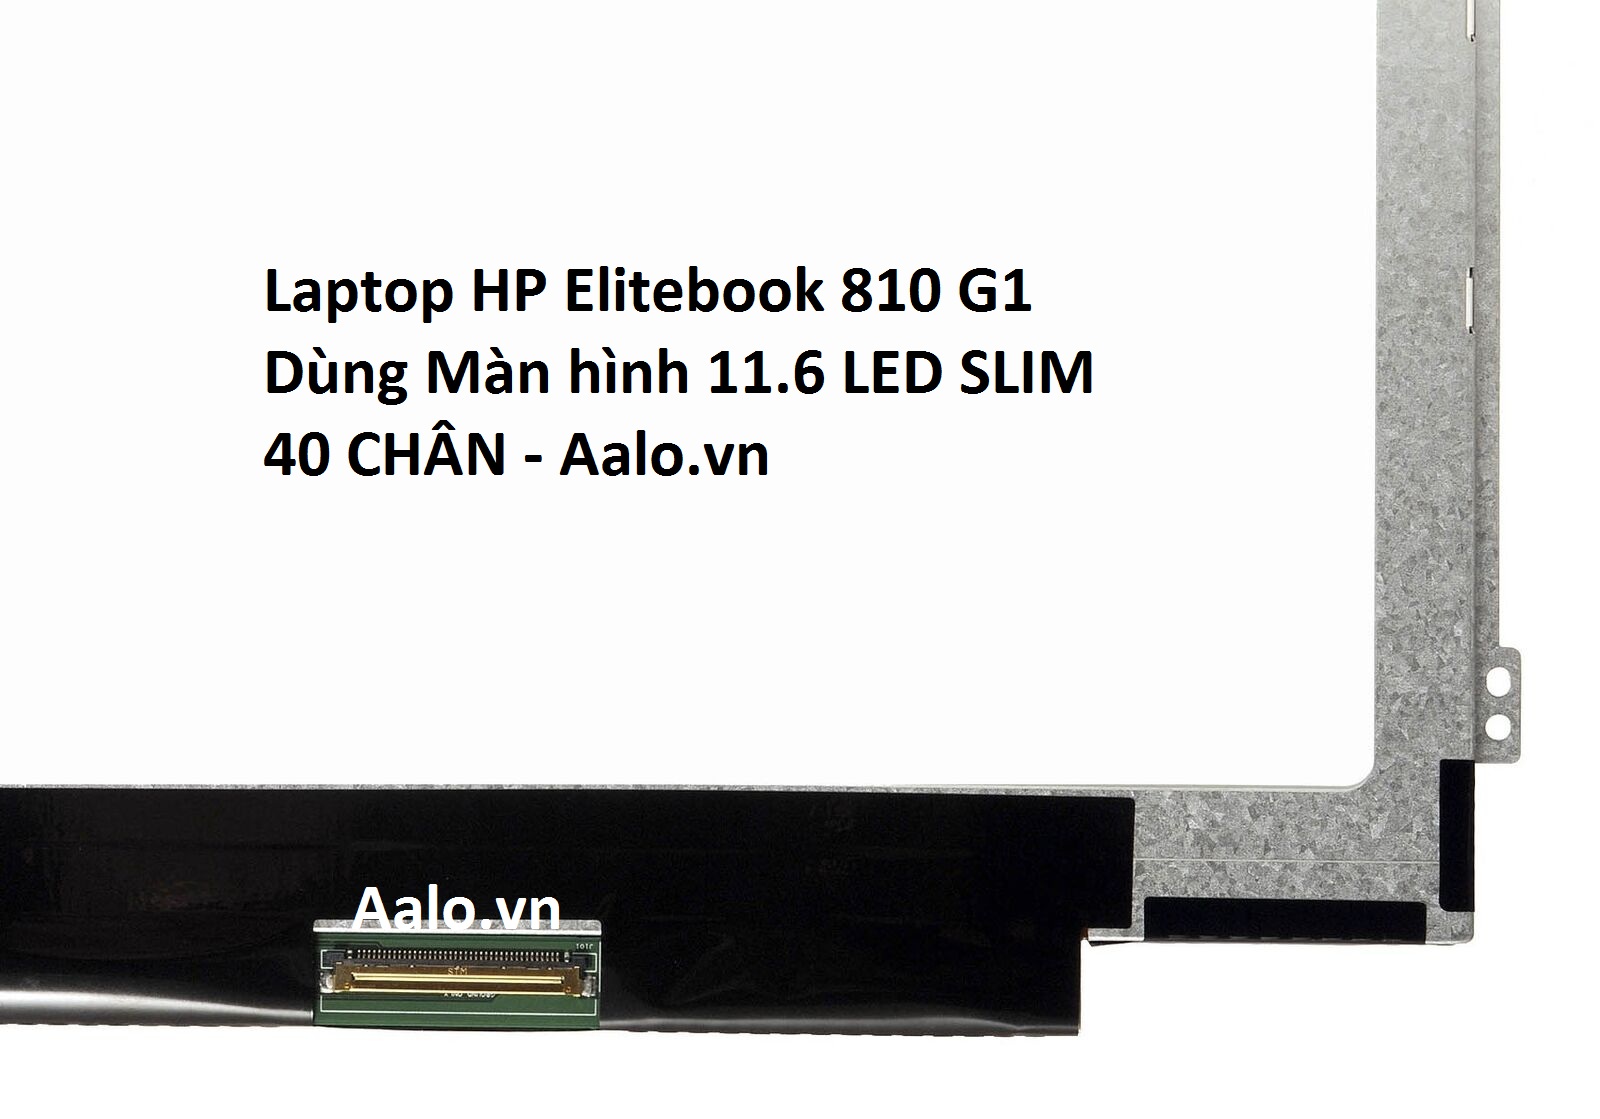 Màn hình Laptop HP Elitebook 810 G1 - Aalo.vn